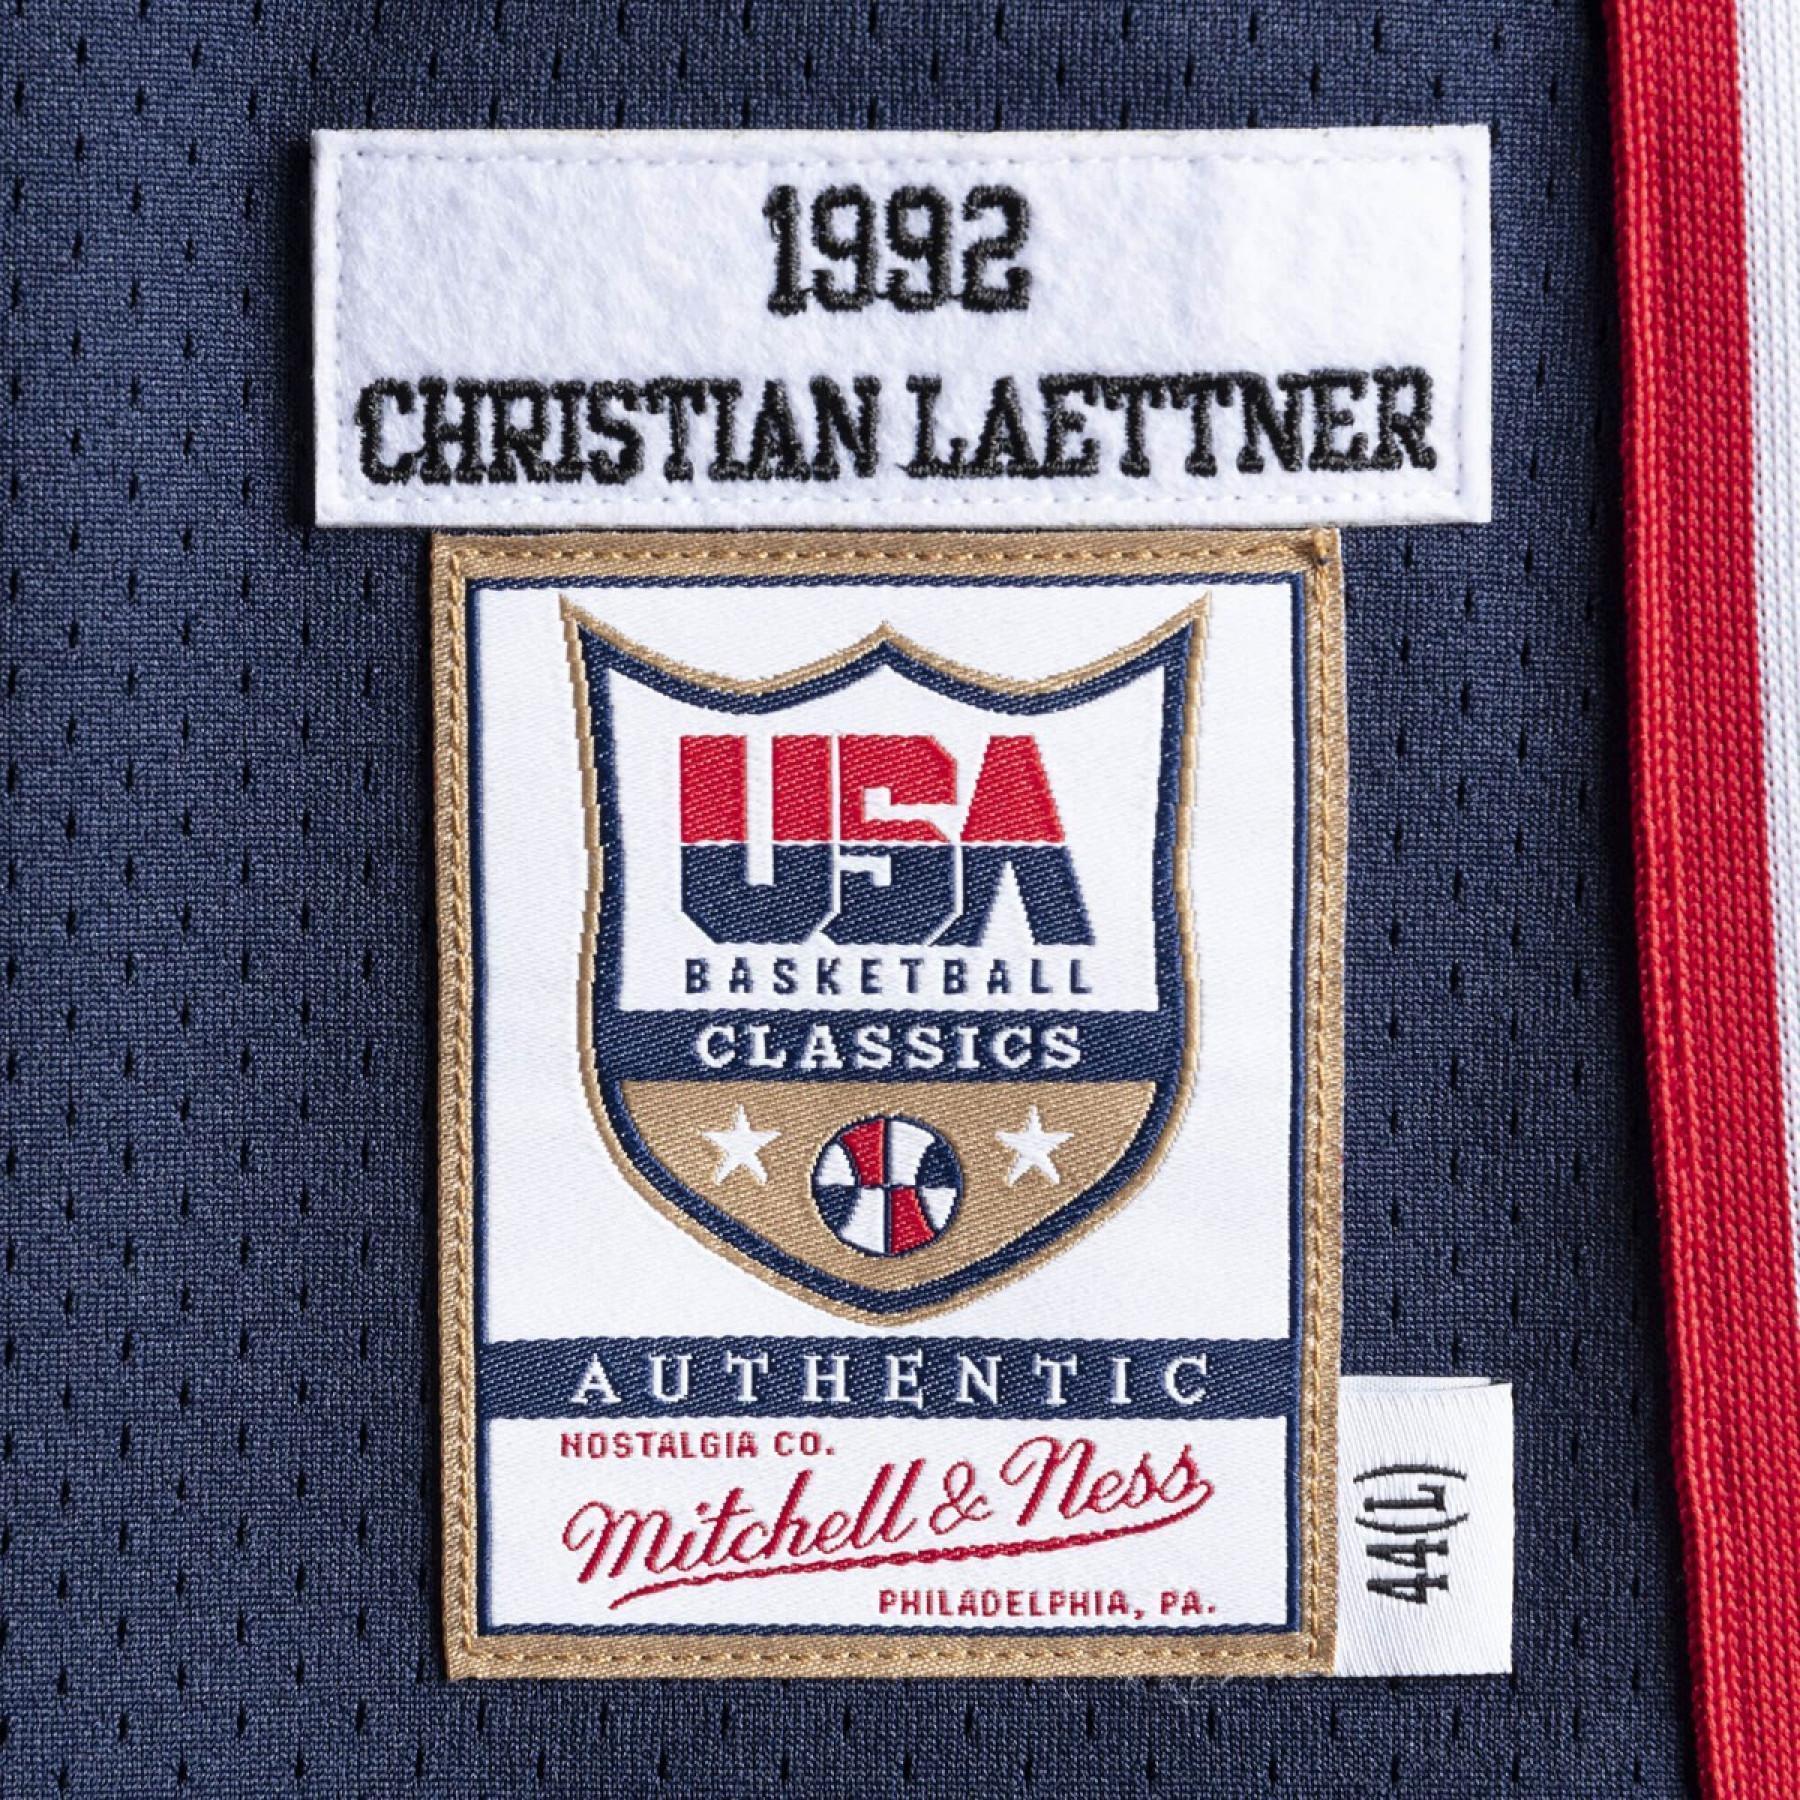 Authentiek teamshirt USA nba Christian Laettner